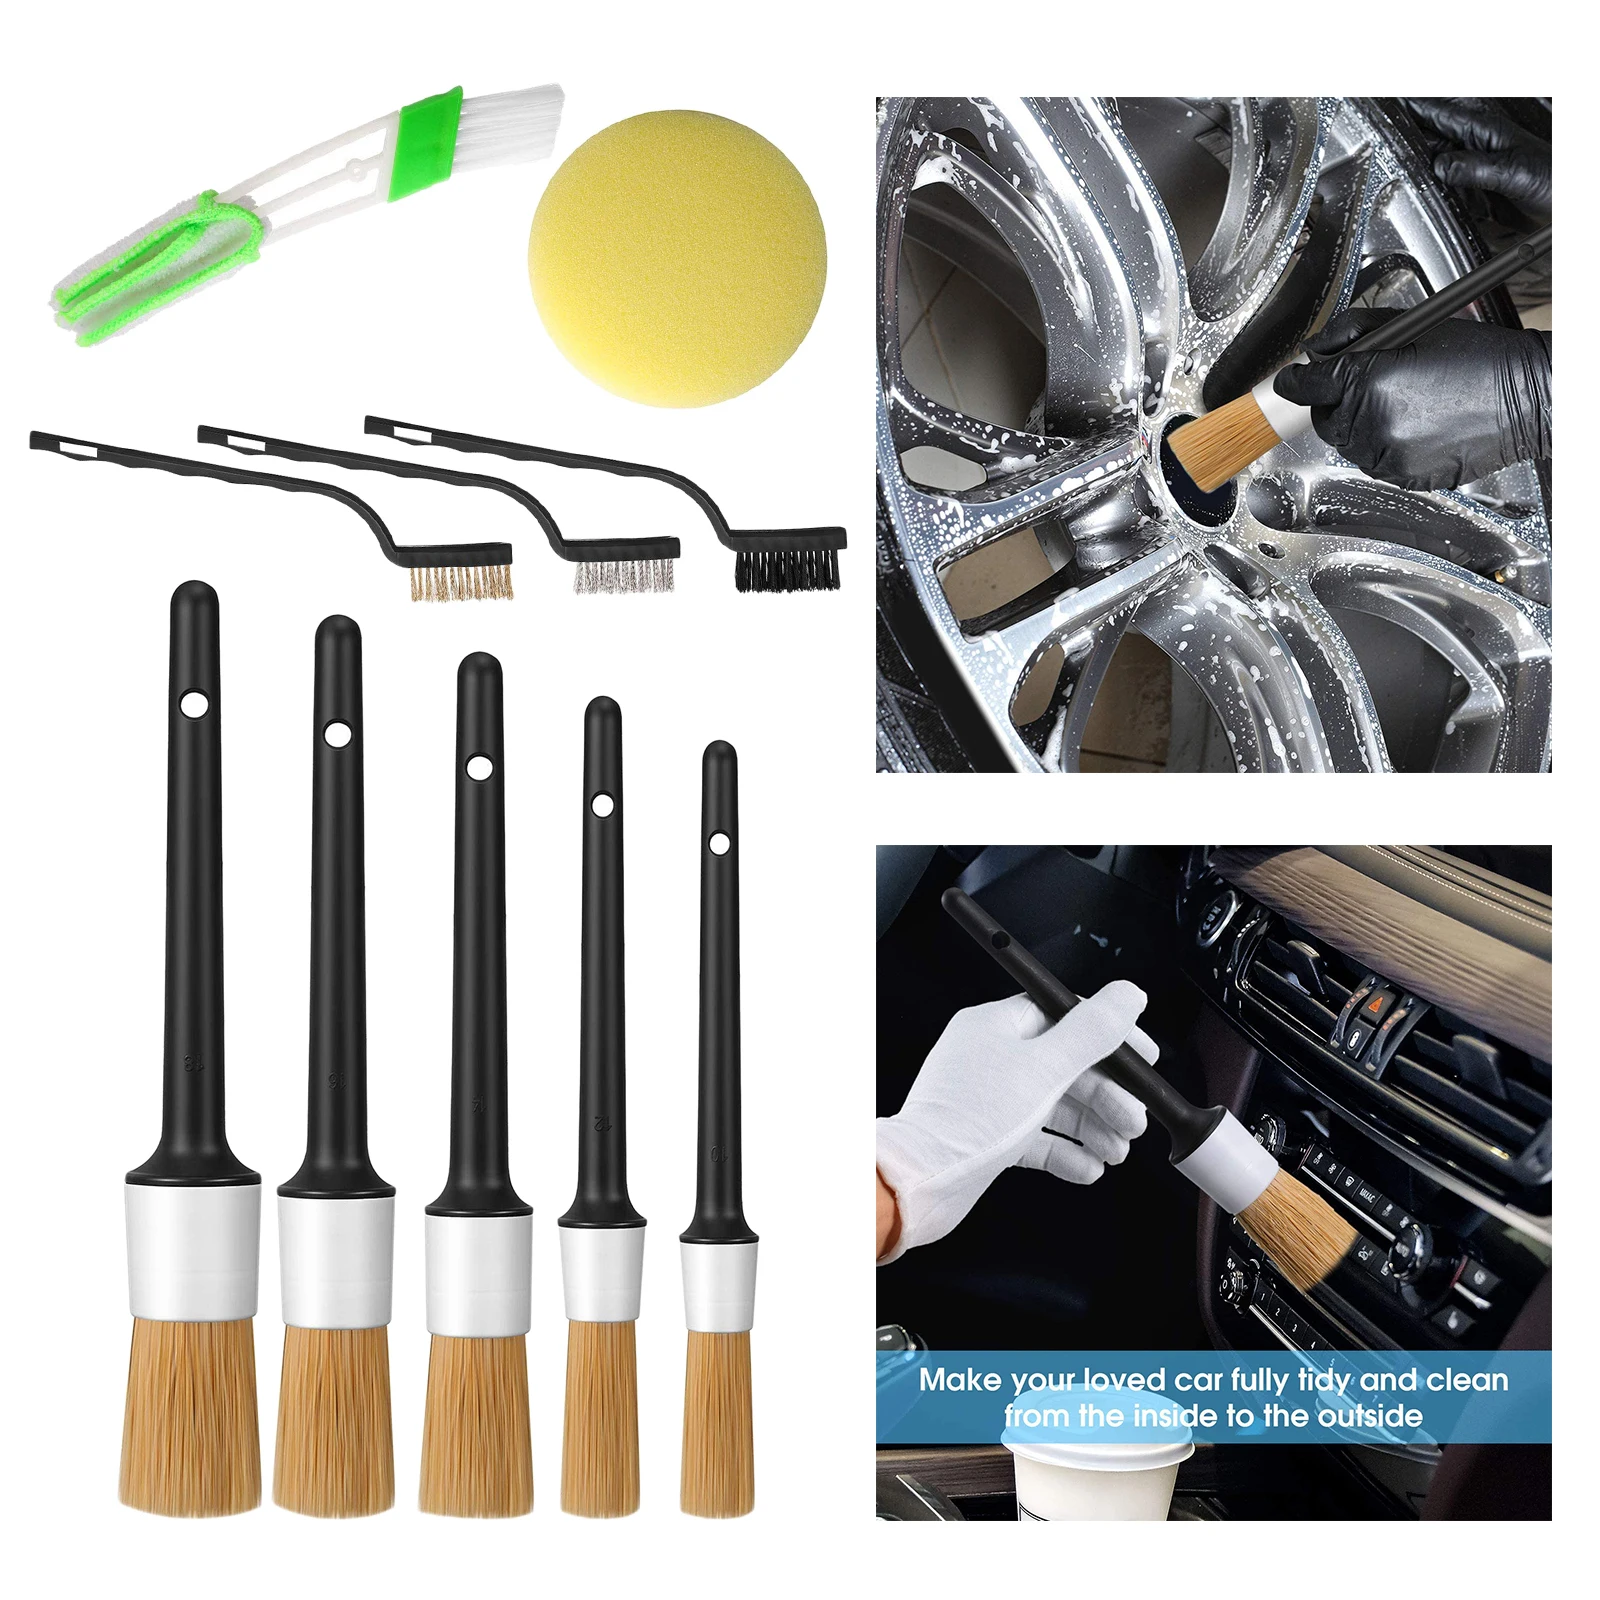 10pcs Car Detailing Brush Kits Wheel Engine Clean Brush Set Waxing Sponge